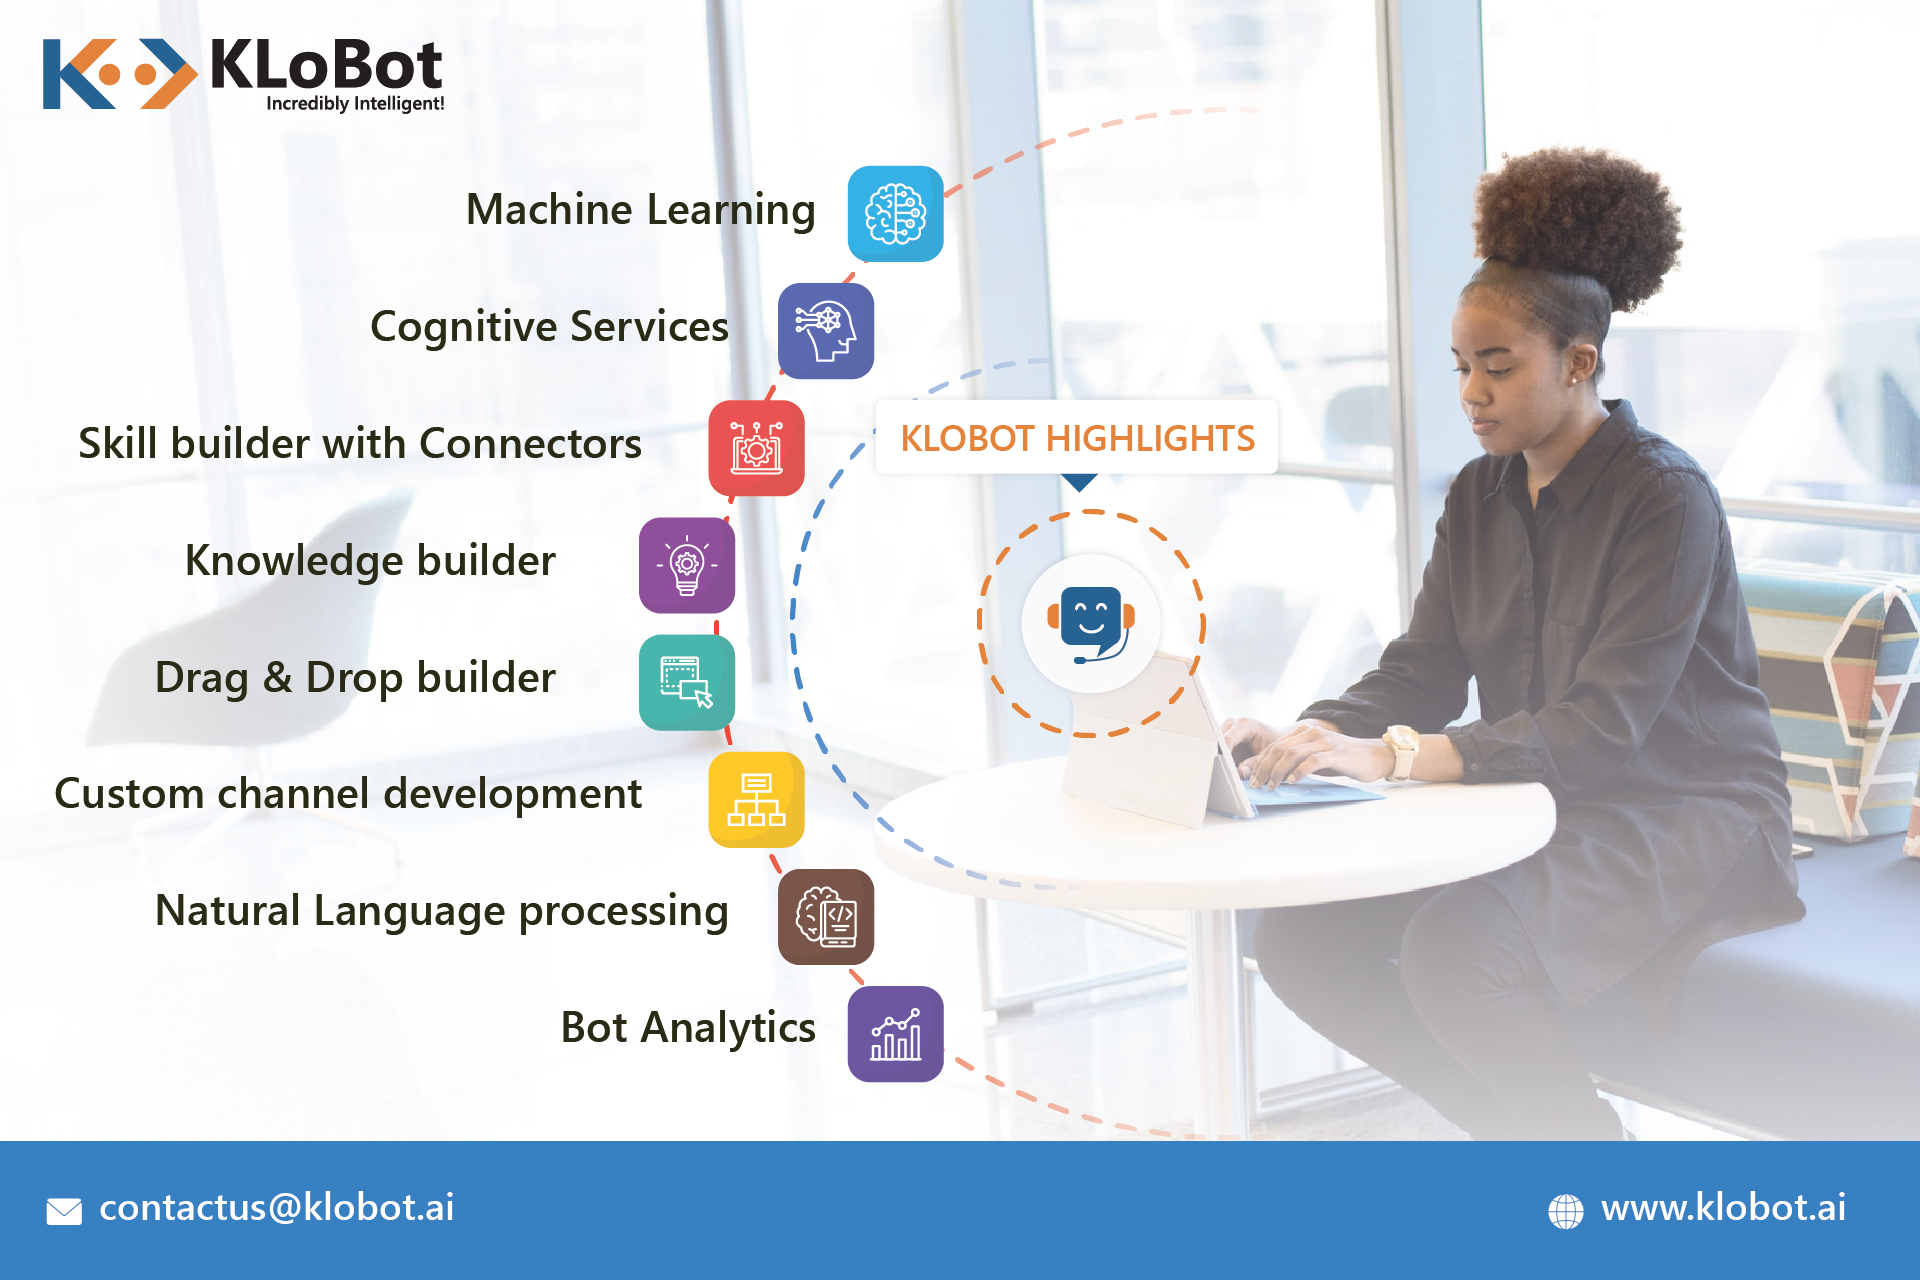 KLoBot features